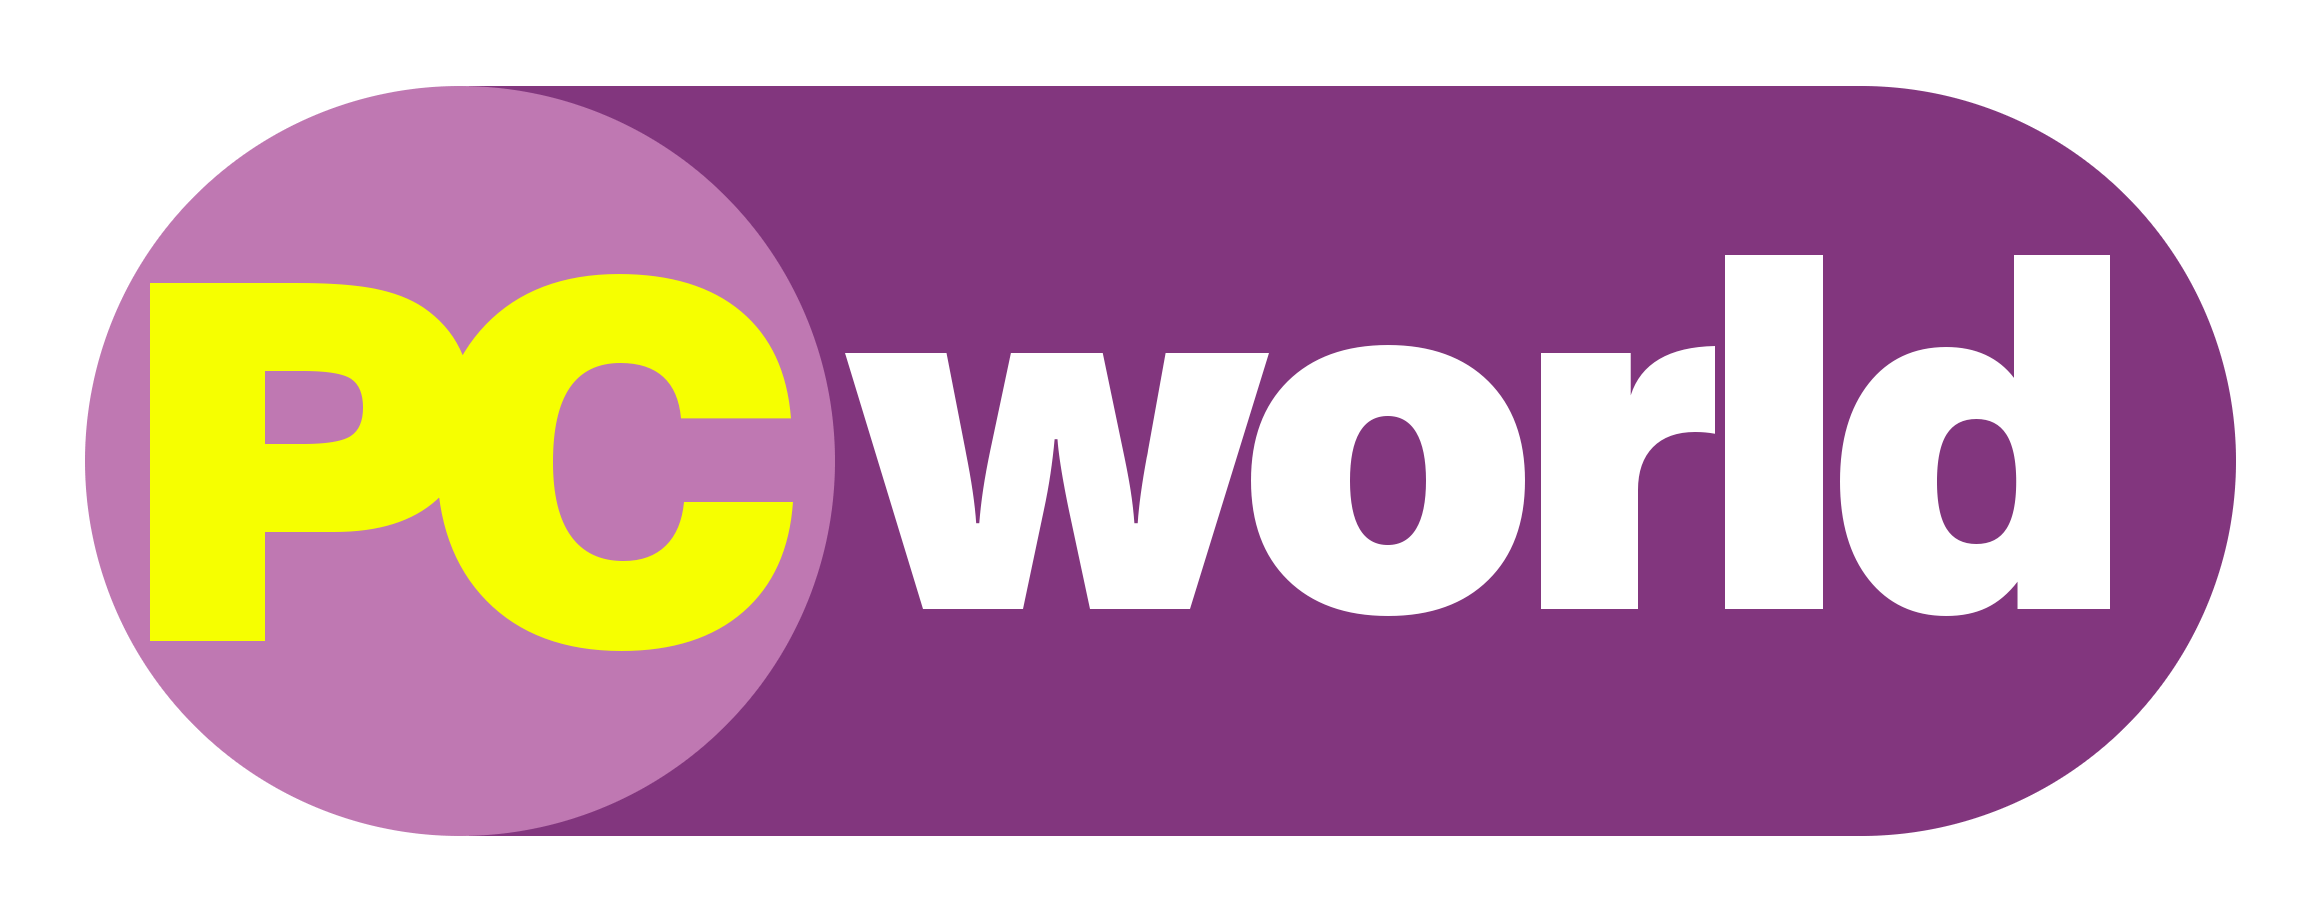 PC World Logo - PC World